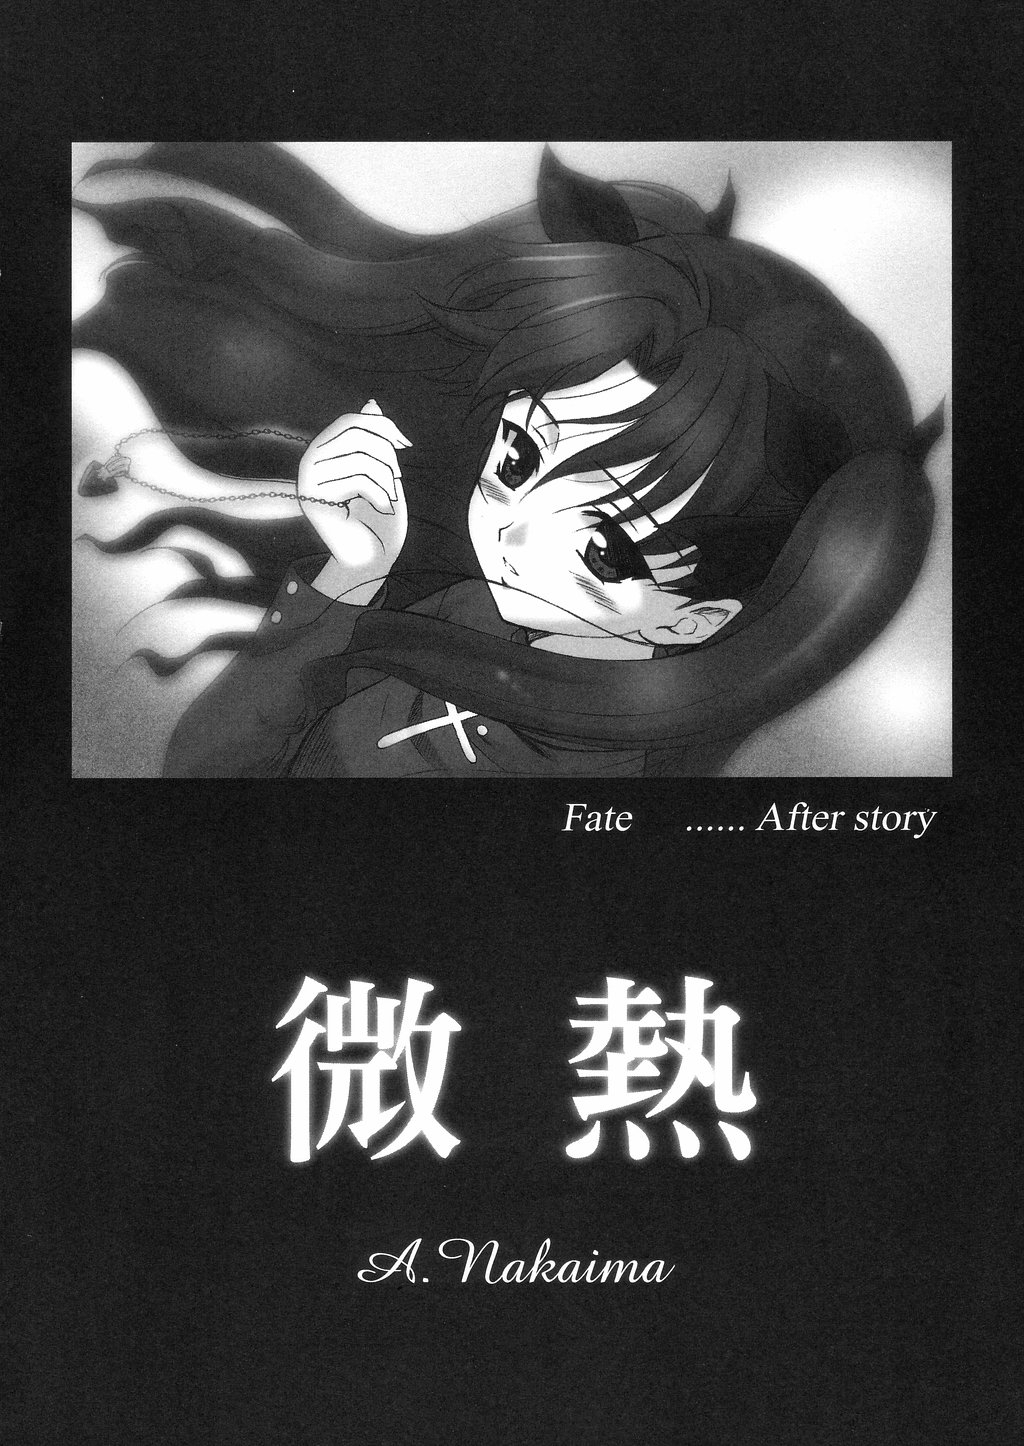 (C66) [STUDIO RUNAWAY WOLF (中島秋彦)] Fahrenheit99 (Fate/stay night)